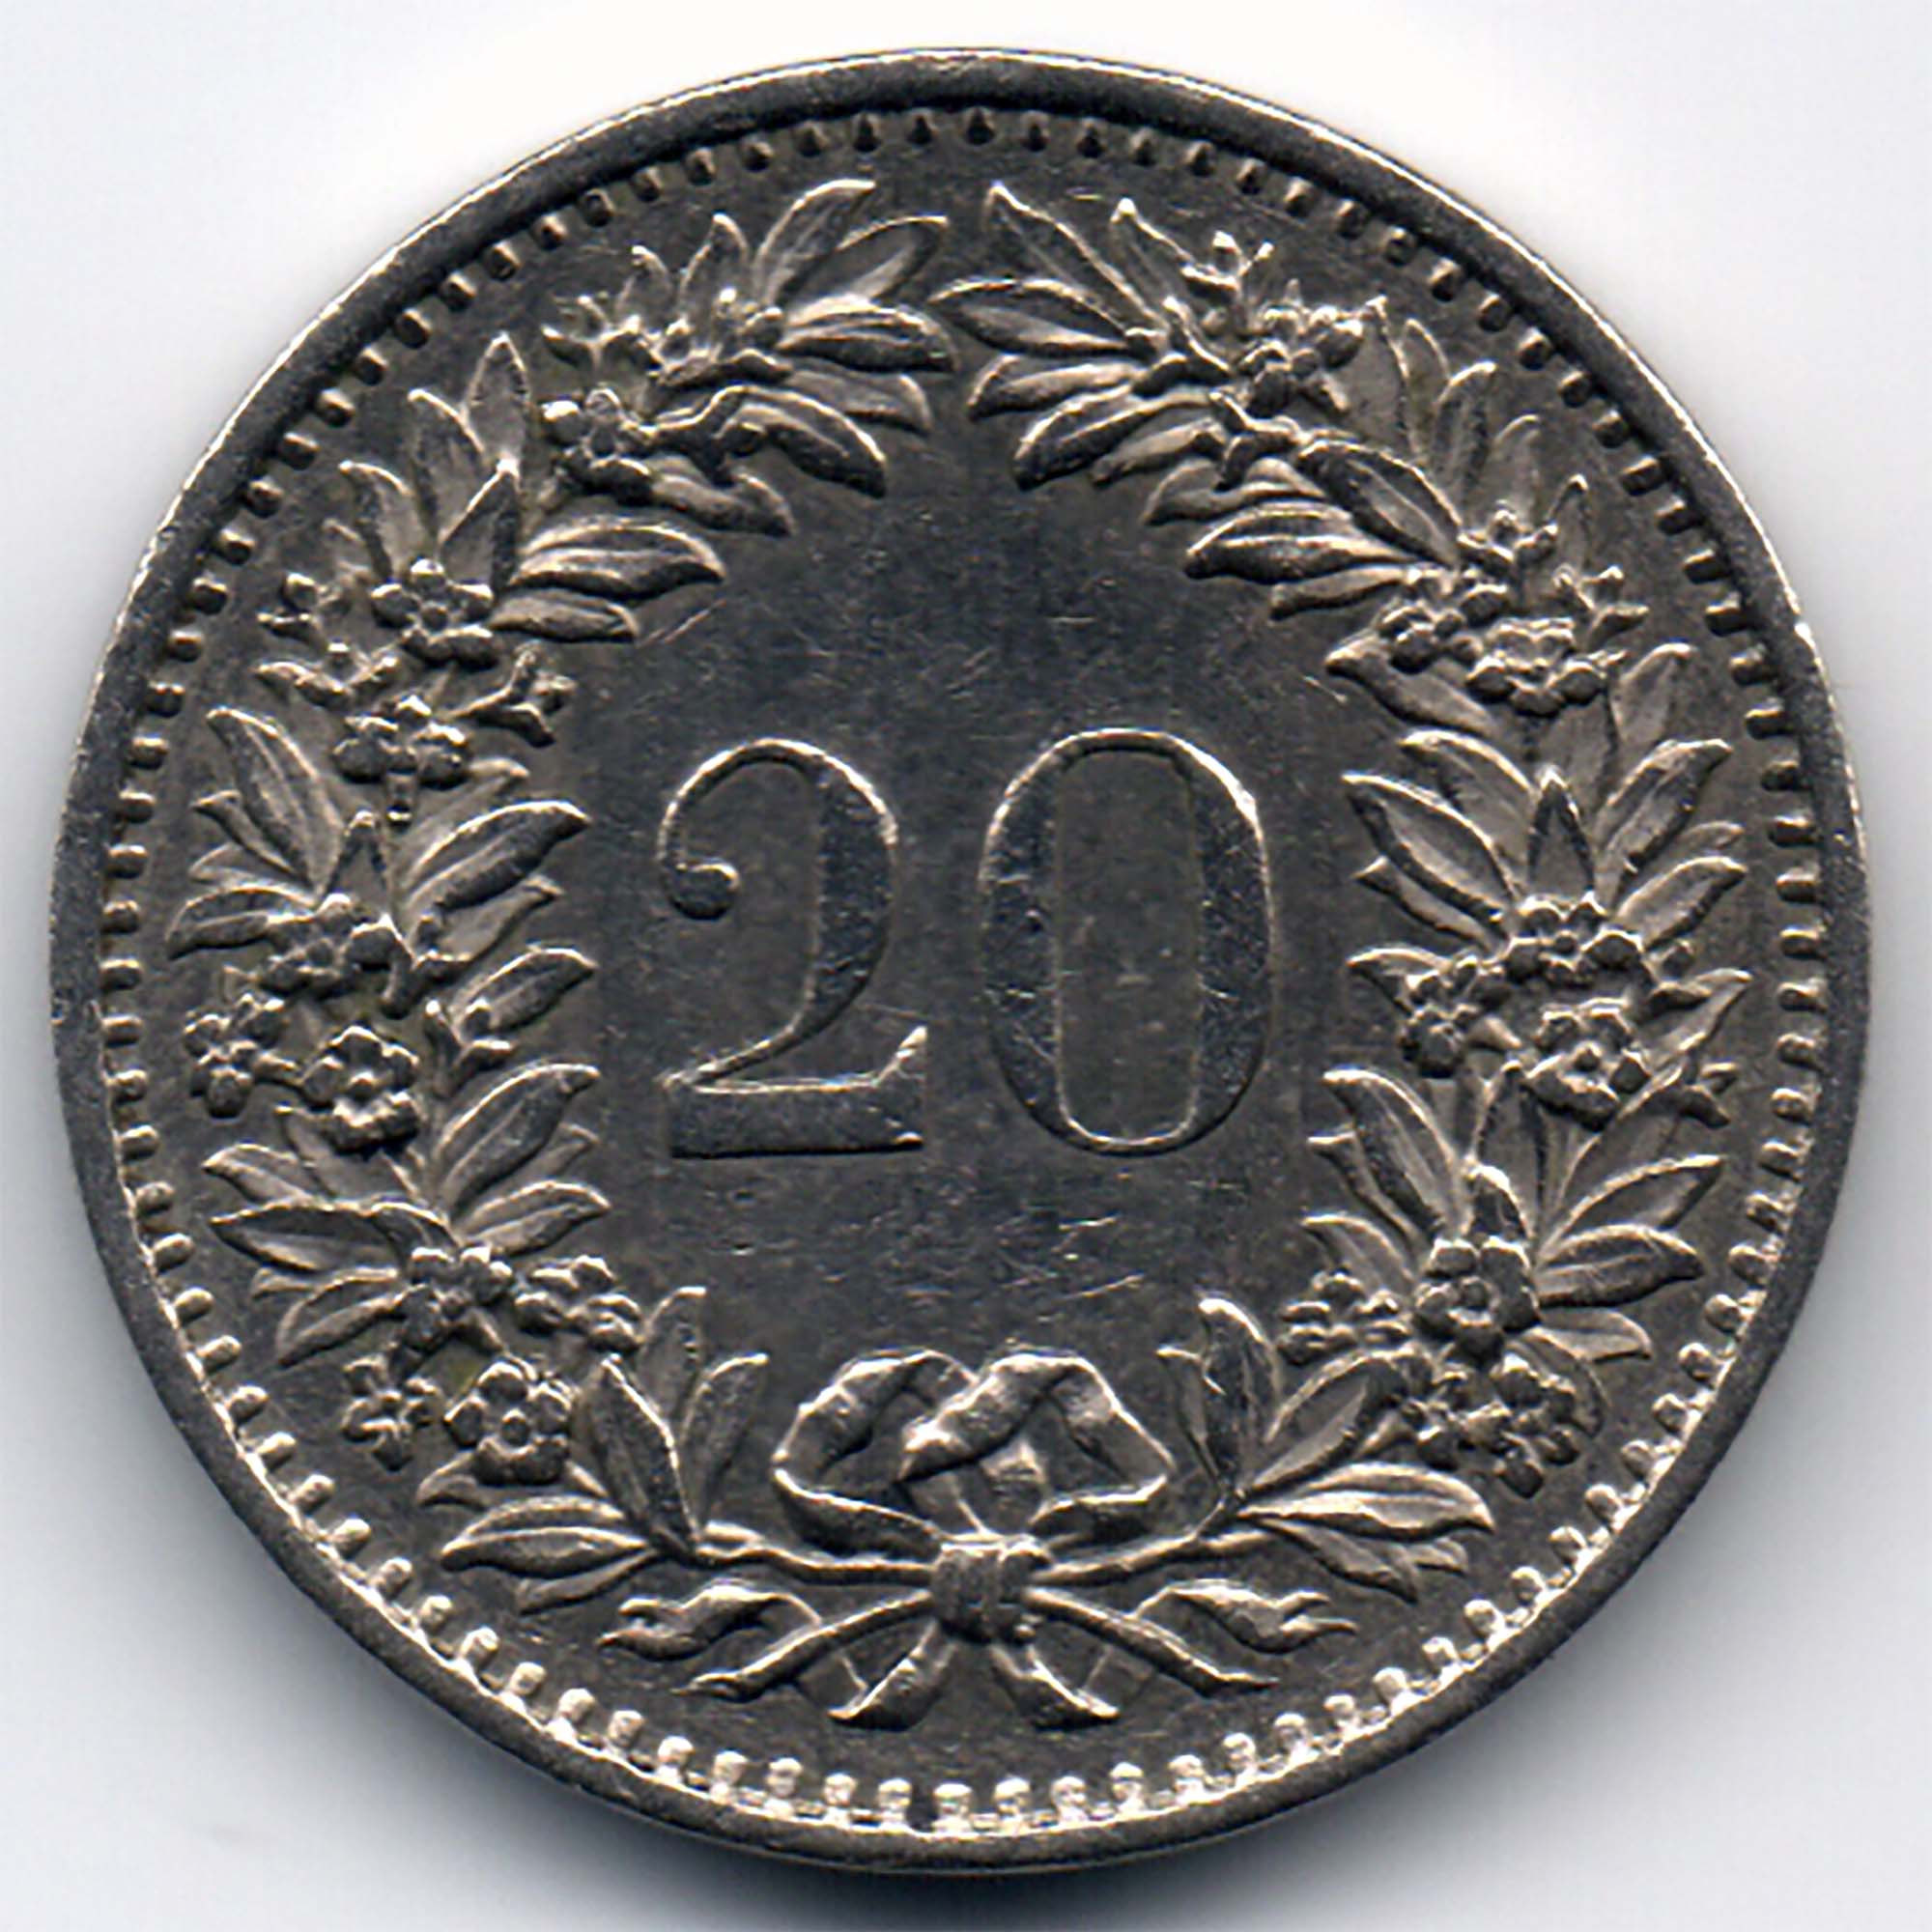 монеты швейцарии каталог